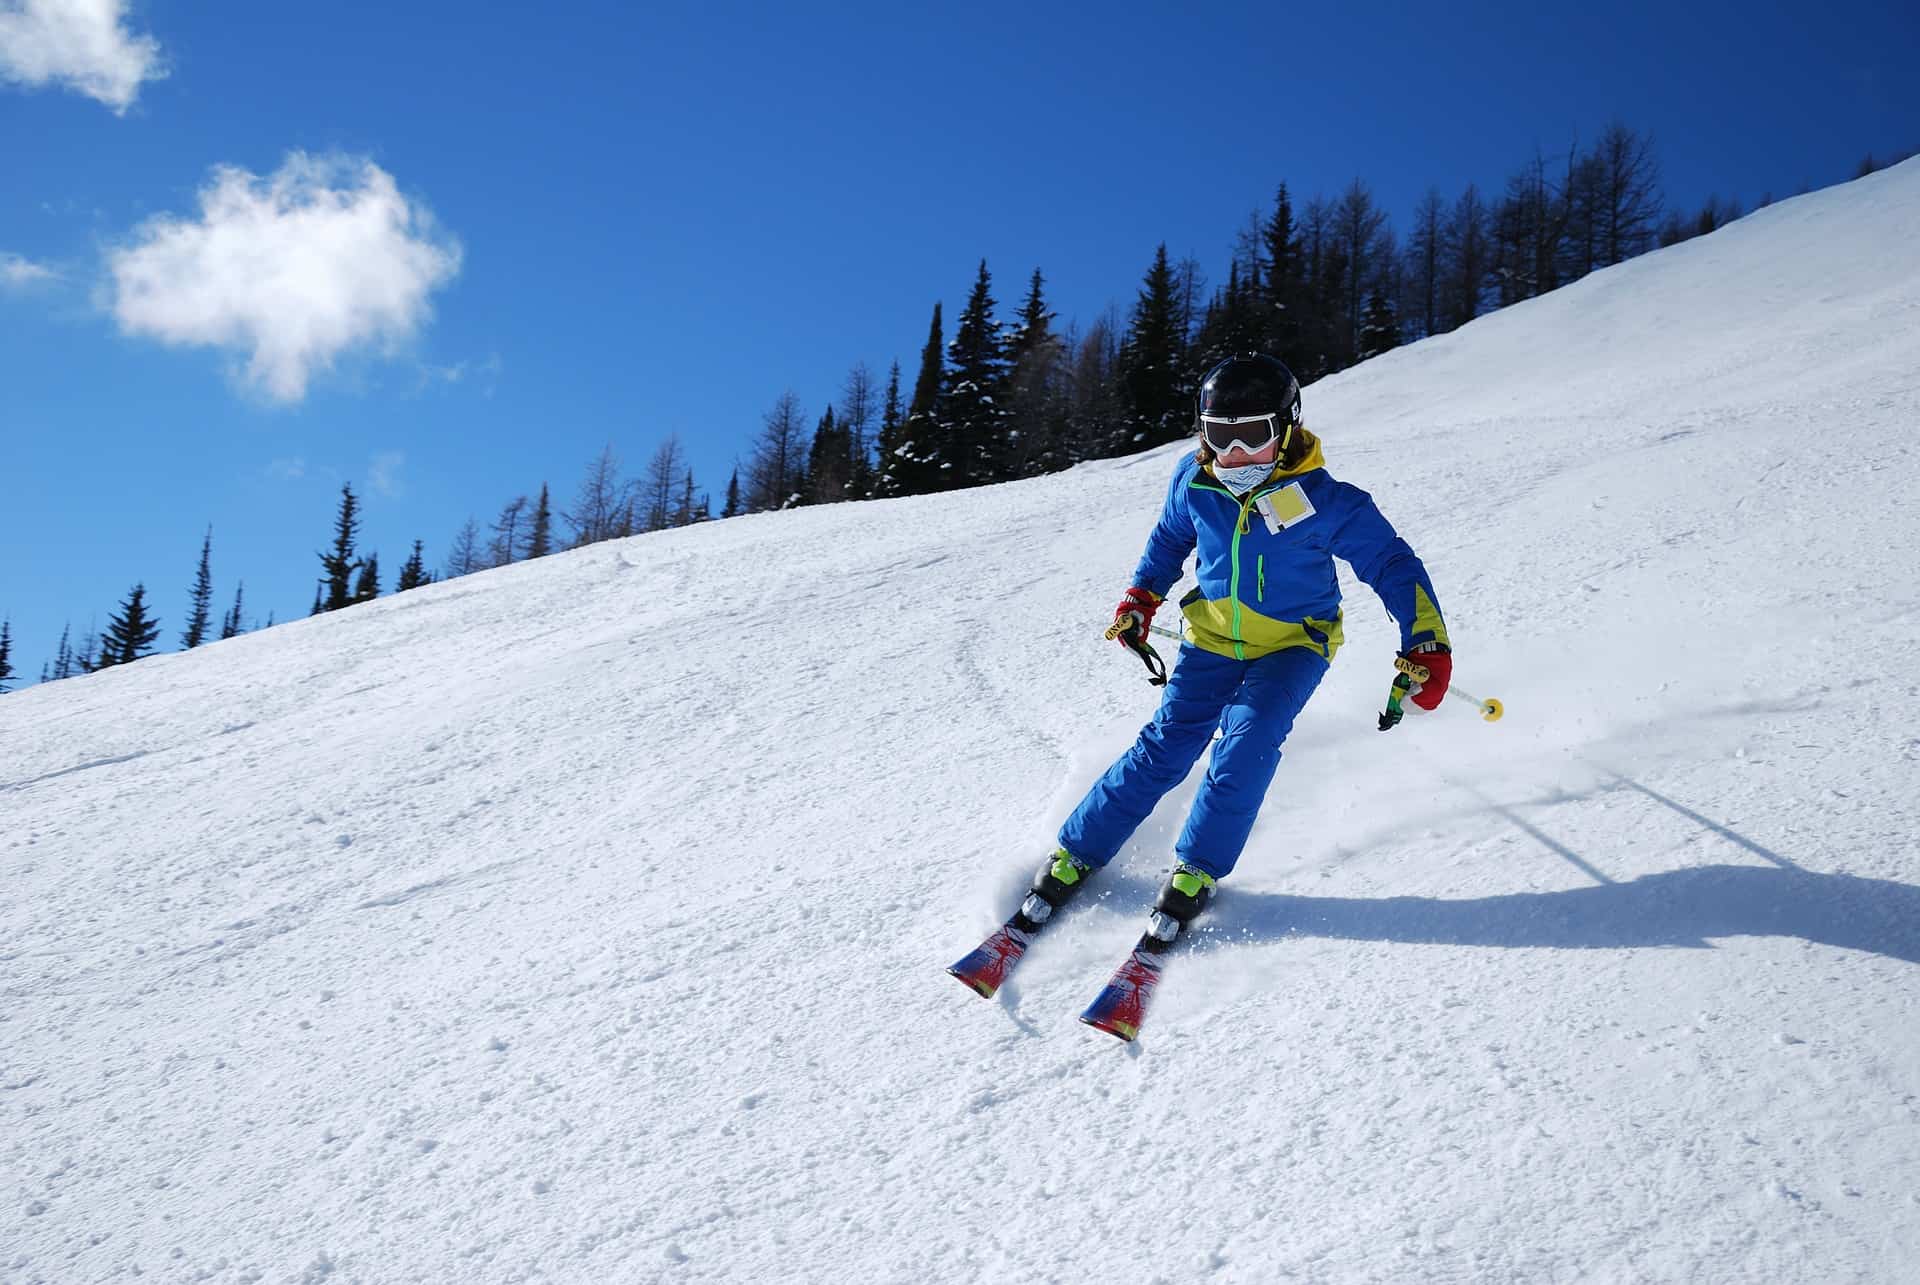 Colorado Travel Restrictions for Ski Season 2020-2021